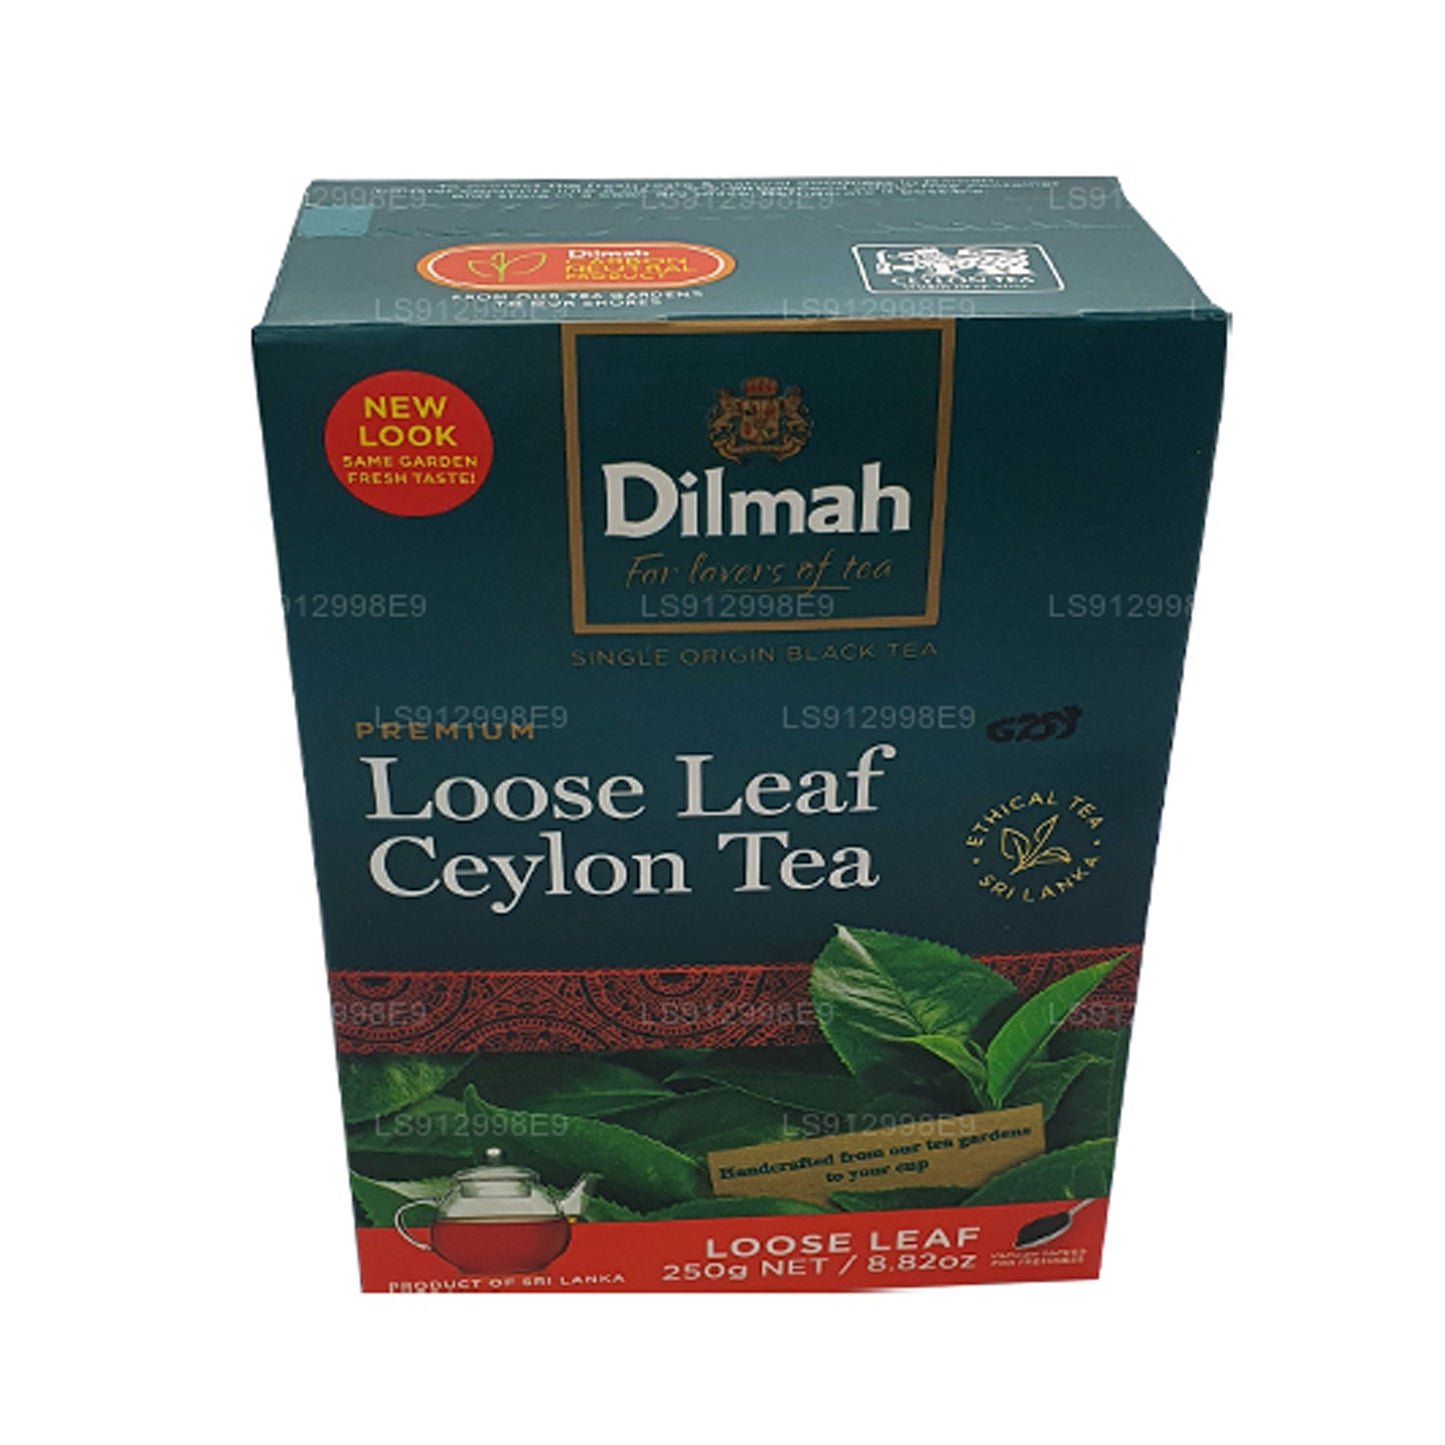 Dilmah Premium Ceylon Loose Leaf Tea